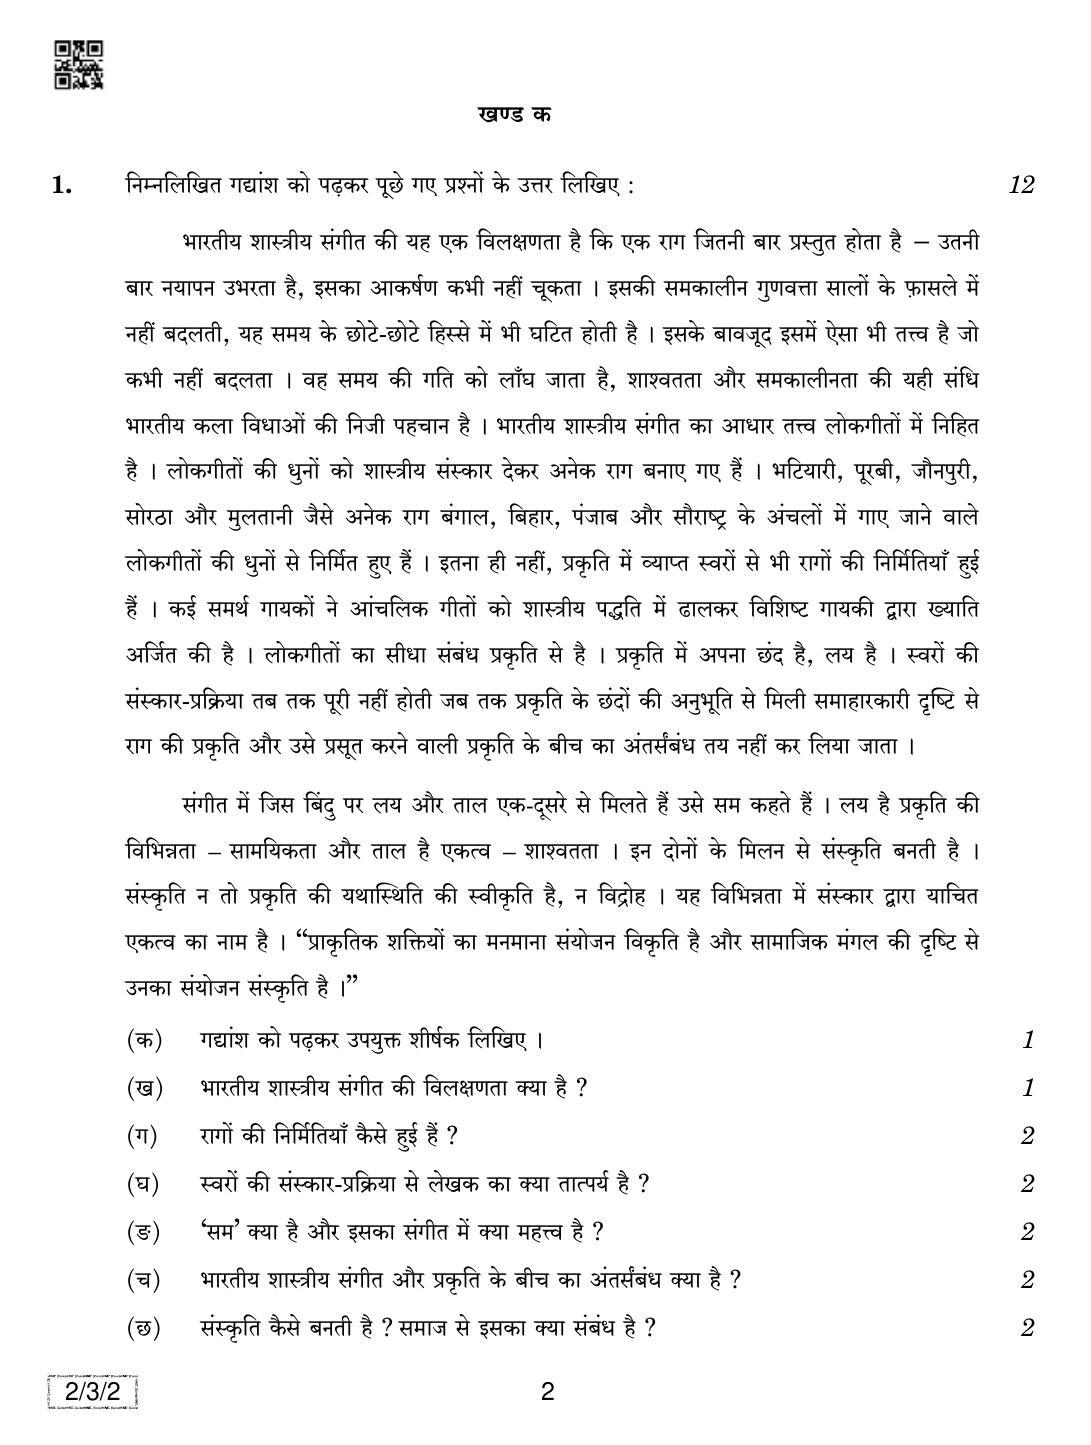 CBSE Class 12 2-3-2 Hindi Core 2019 Question Paper - Page 2